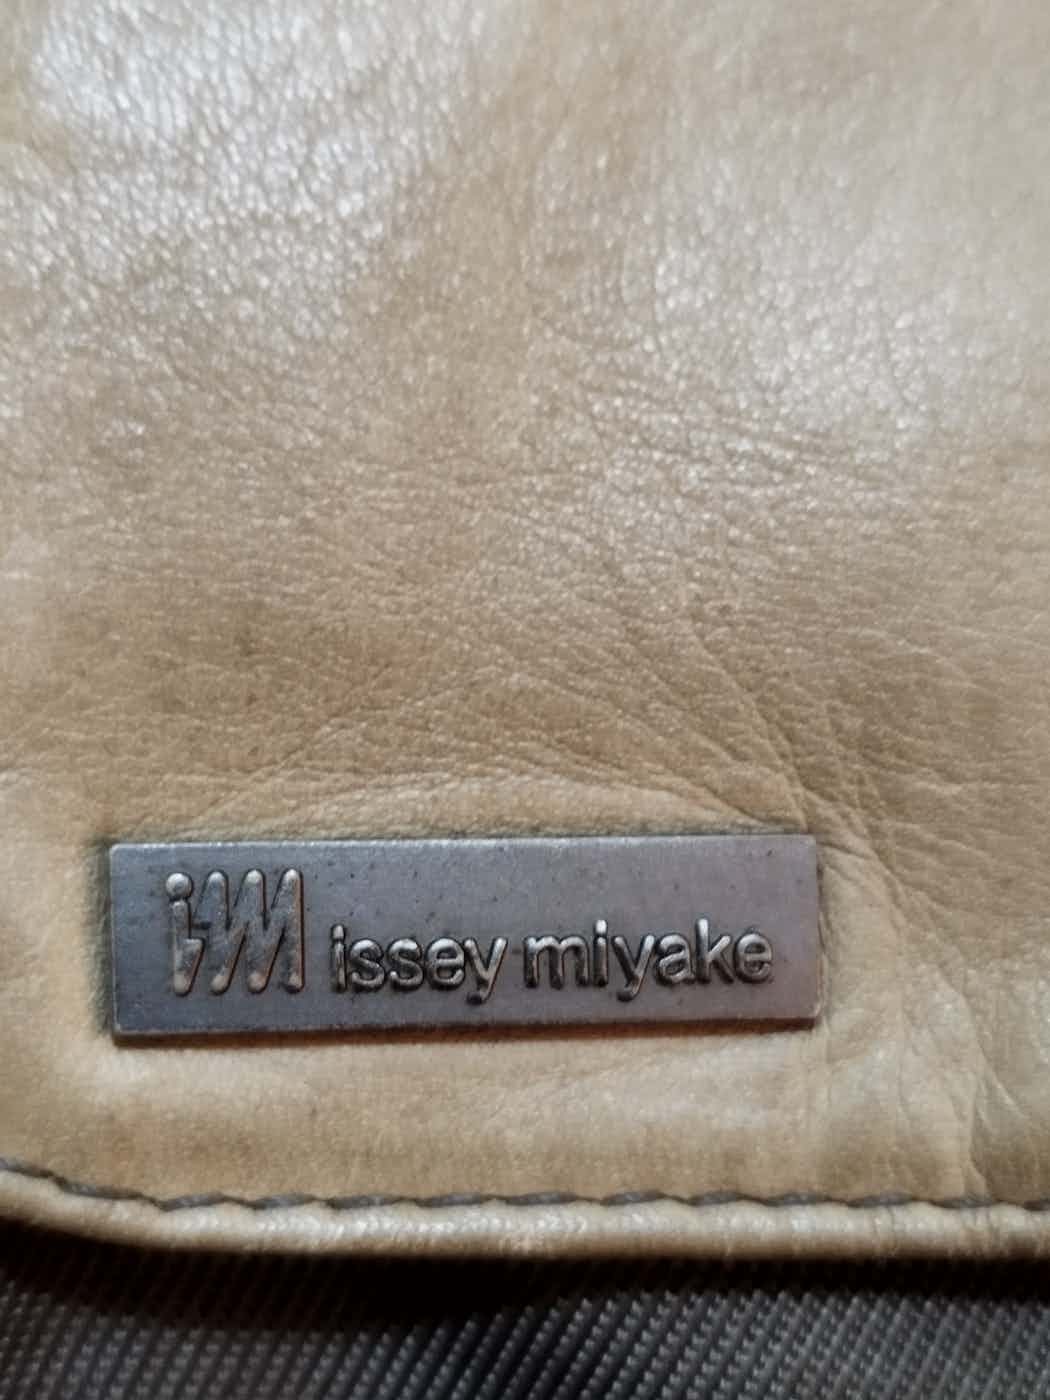 Rare Vintage Isseymiyake cross body bag - 7